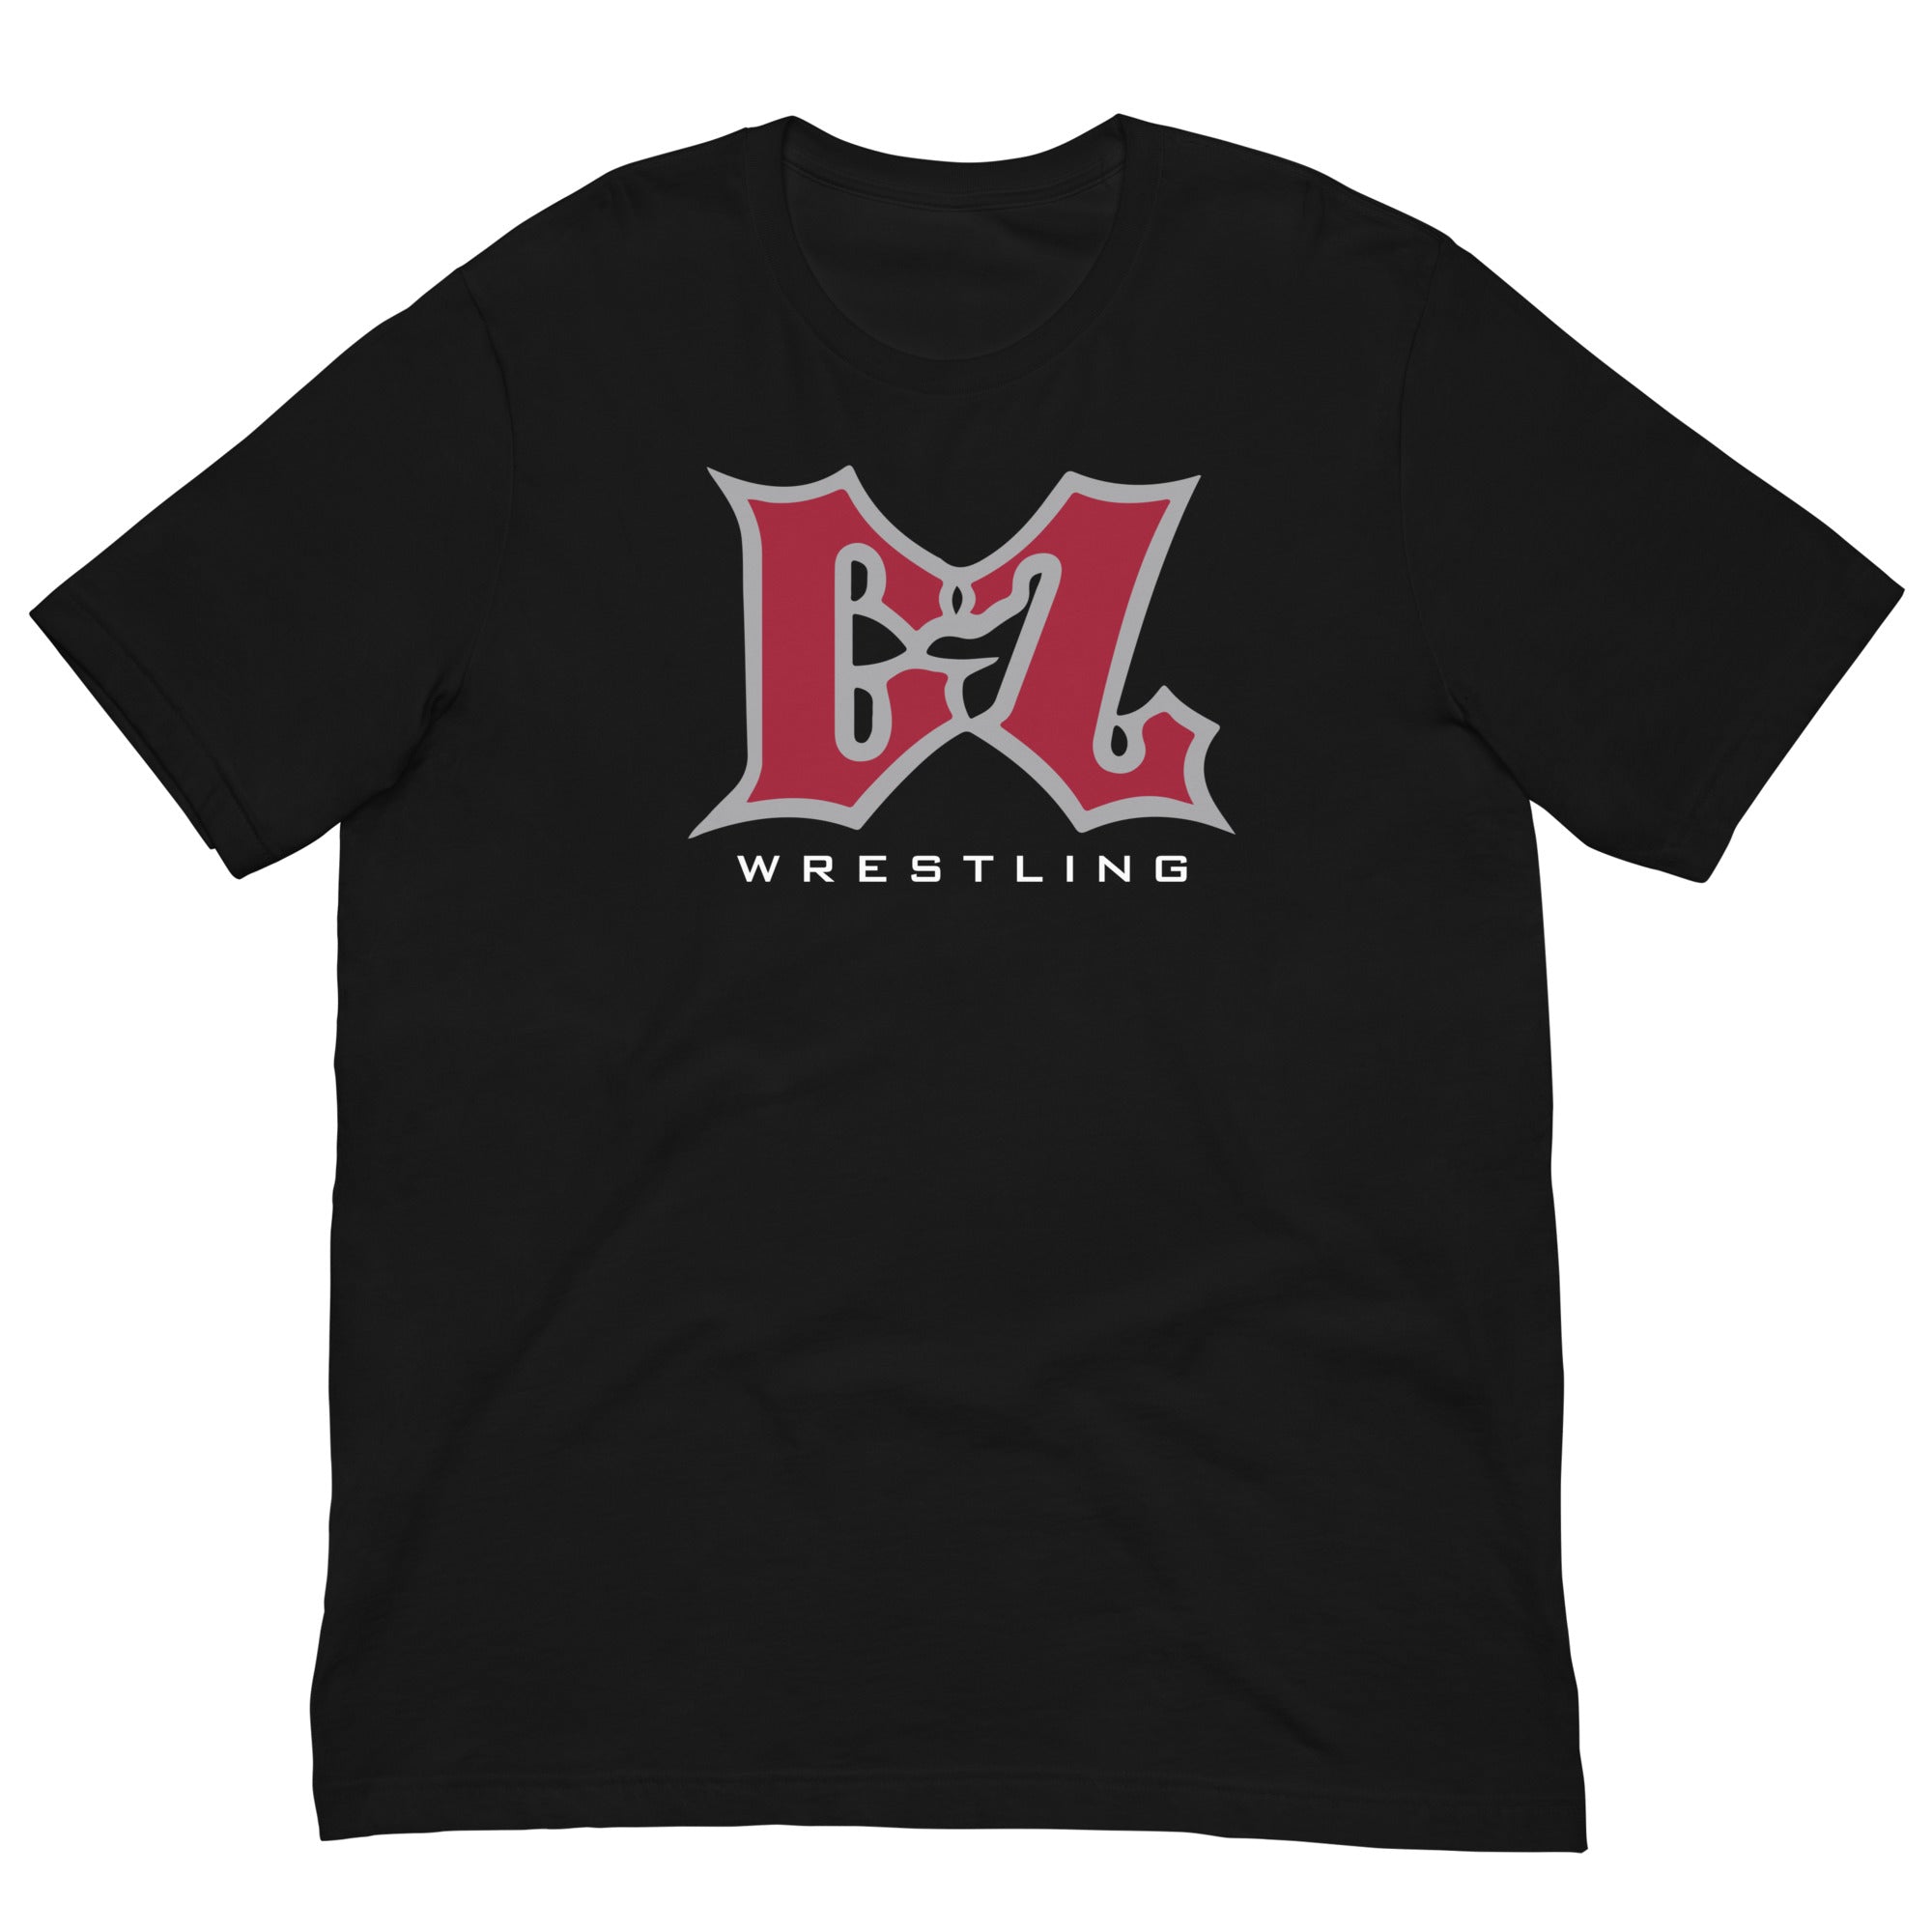 Ground Zero Wrestling Unisex Staple T-Shirt